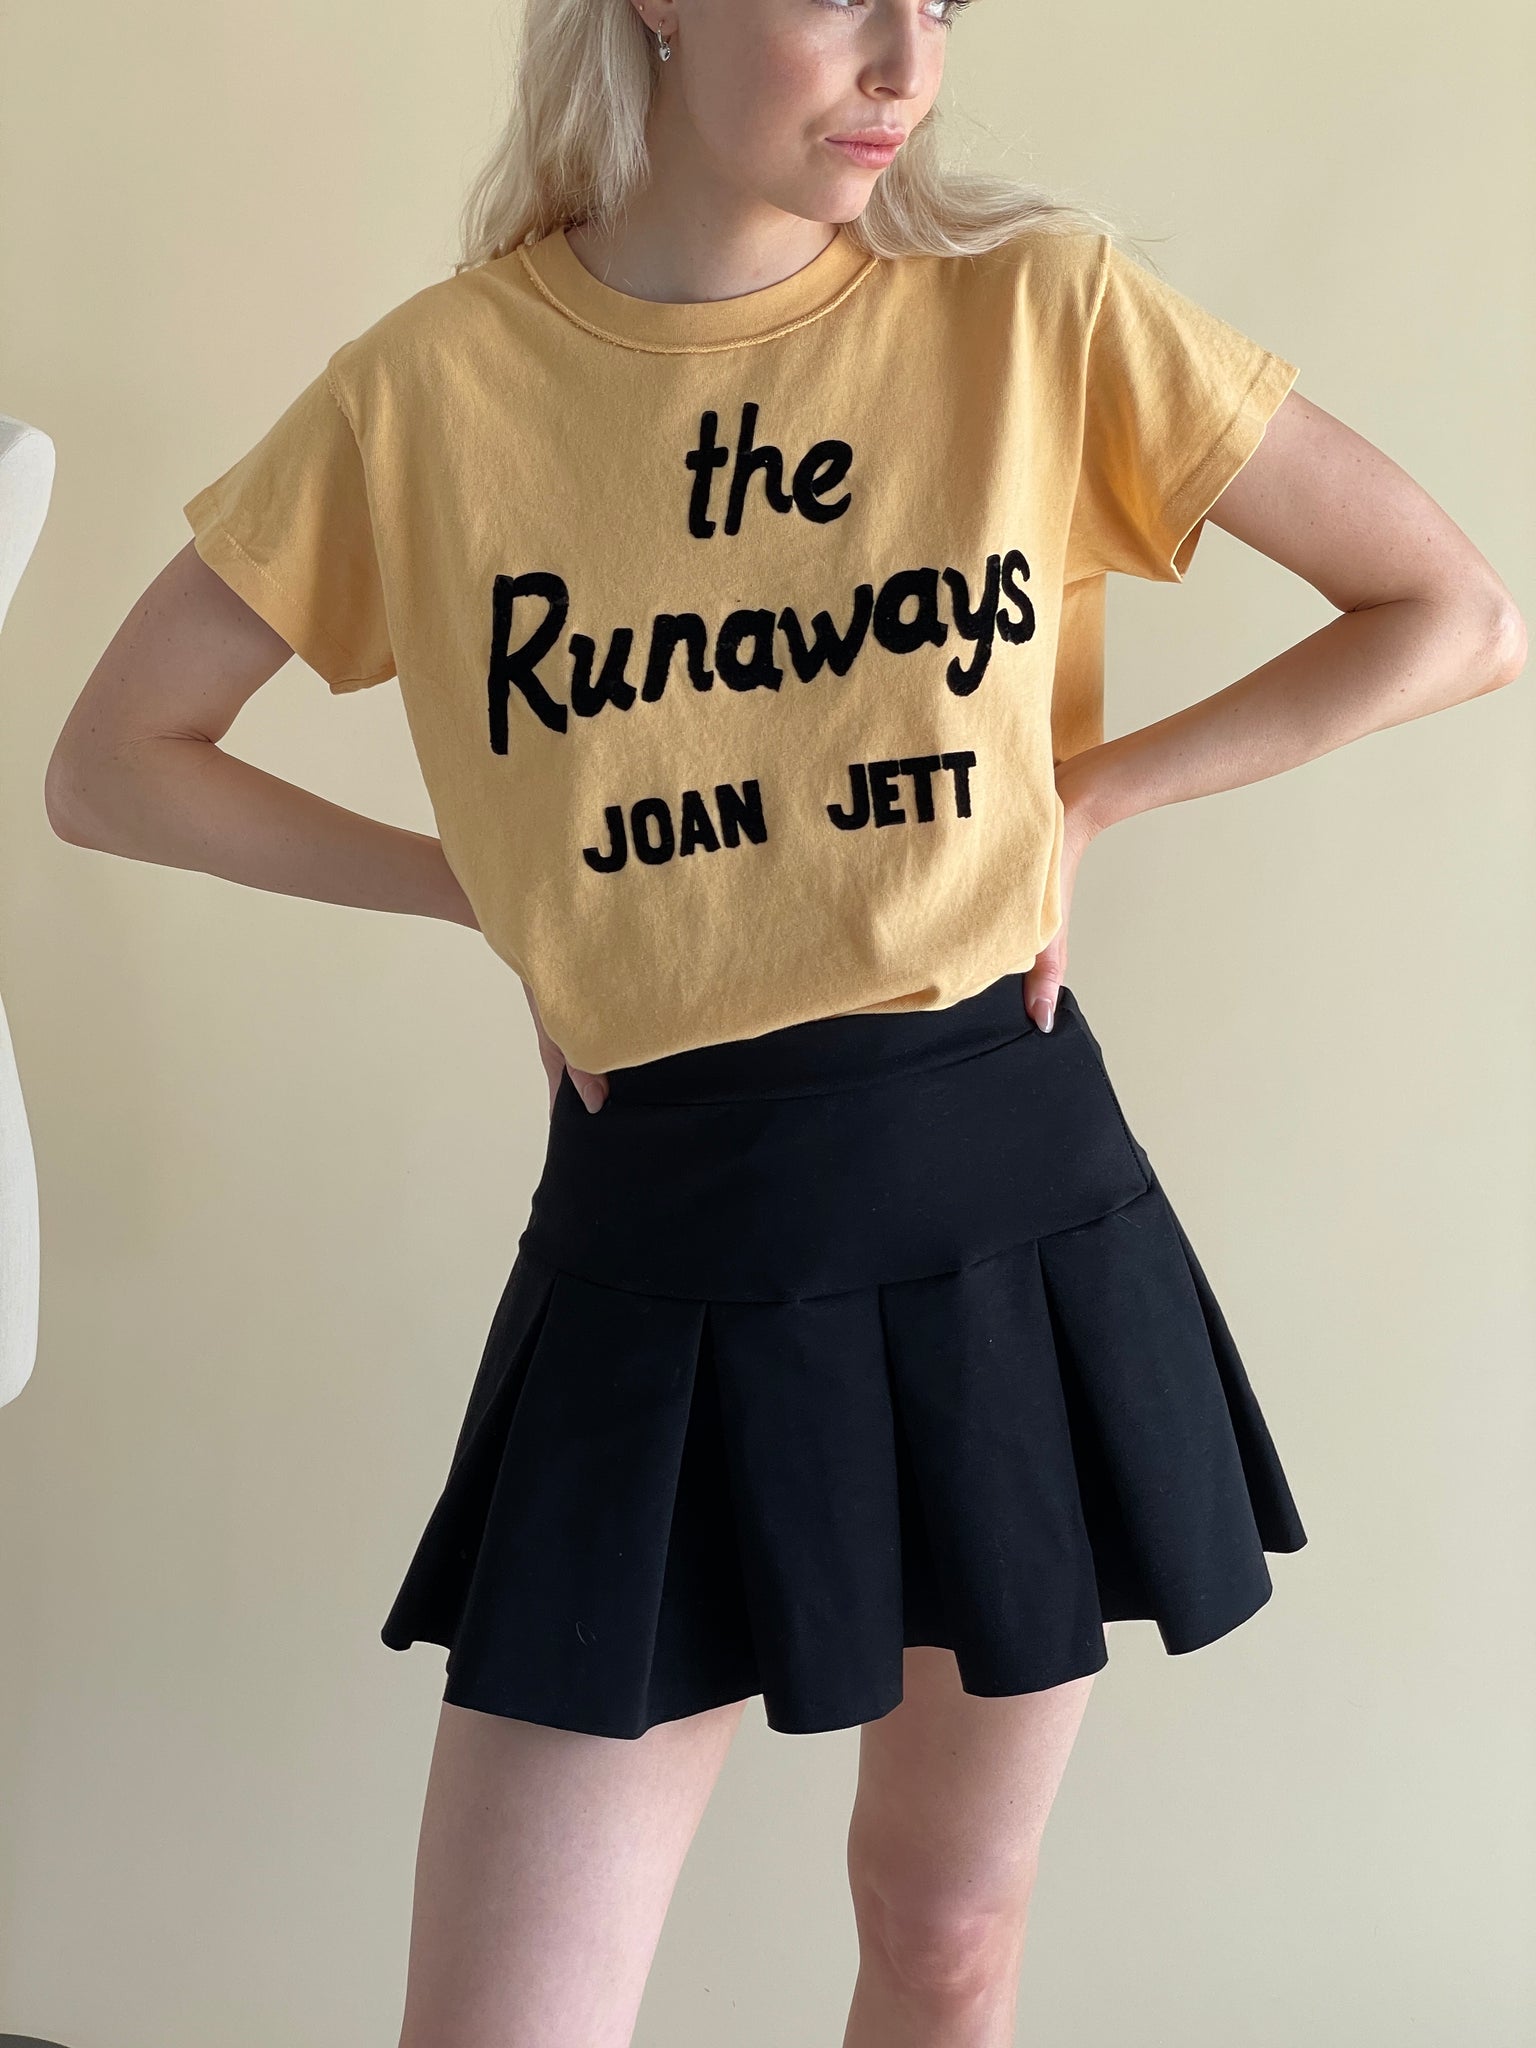 The Joan Jett Runaways Tee